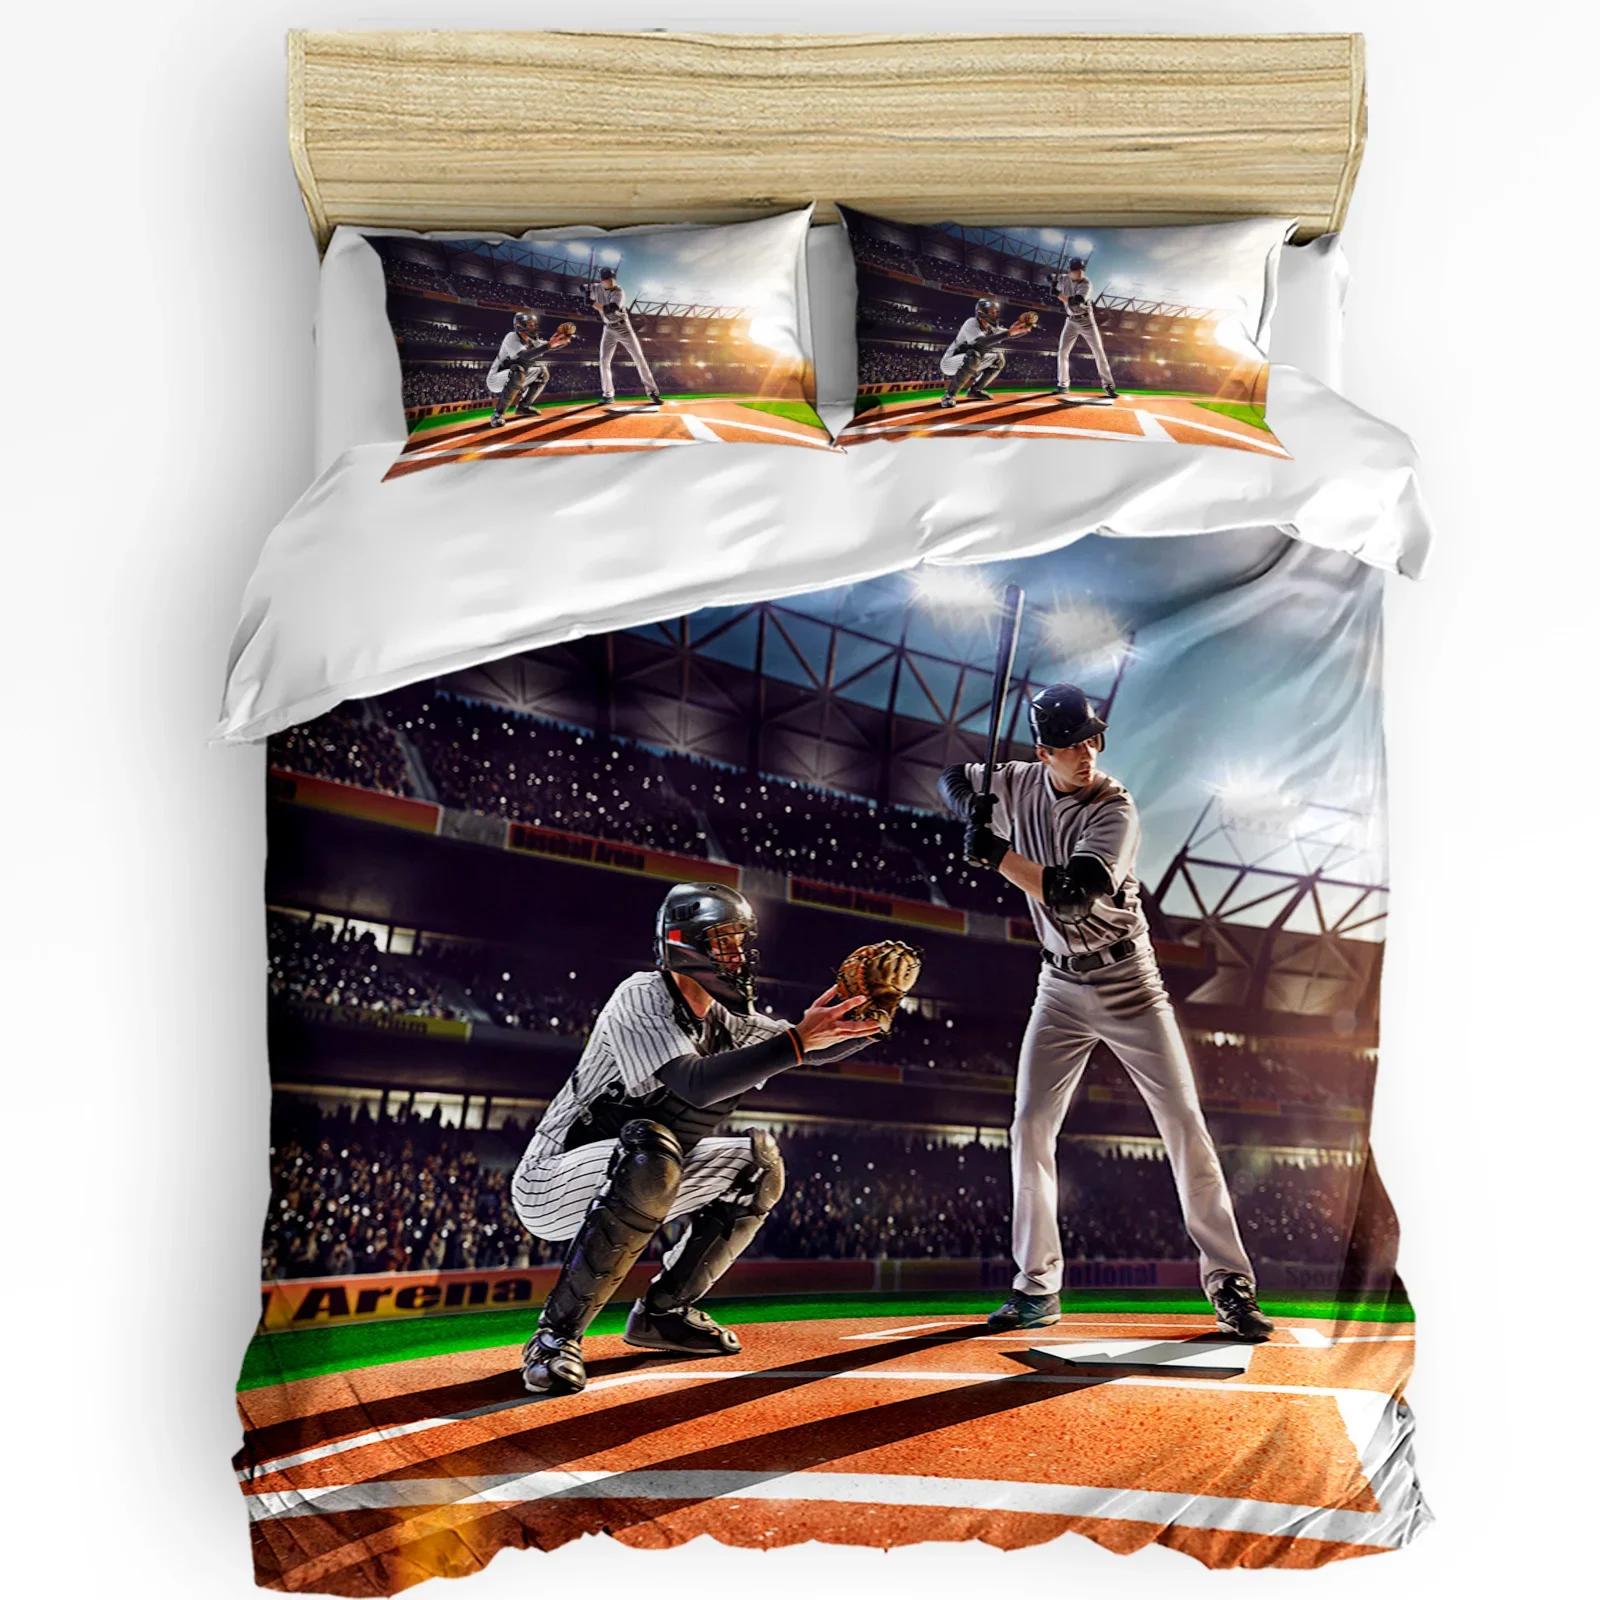 3pcs Bedding Set Sports Baseball Pitch Athlete Home Textile Duvet Cover Pillow Case Boy Kid Teen Girl Bedding Covers